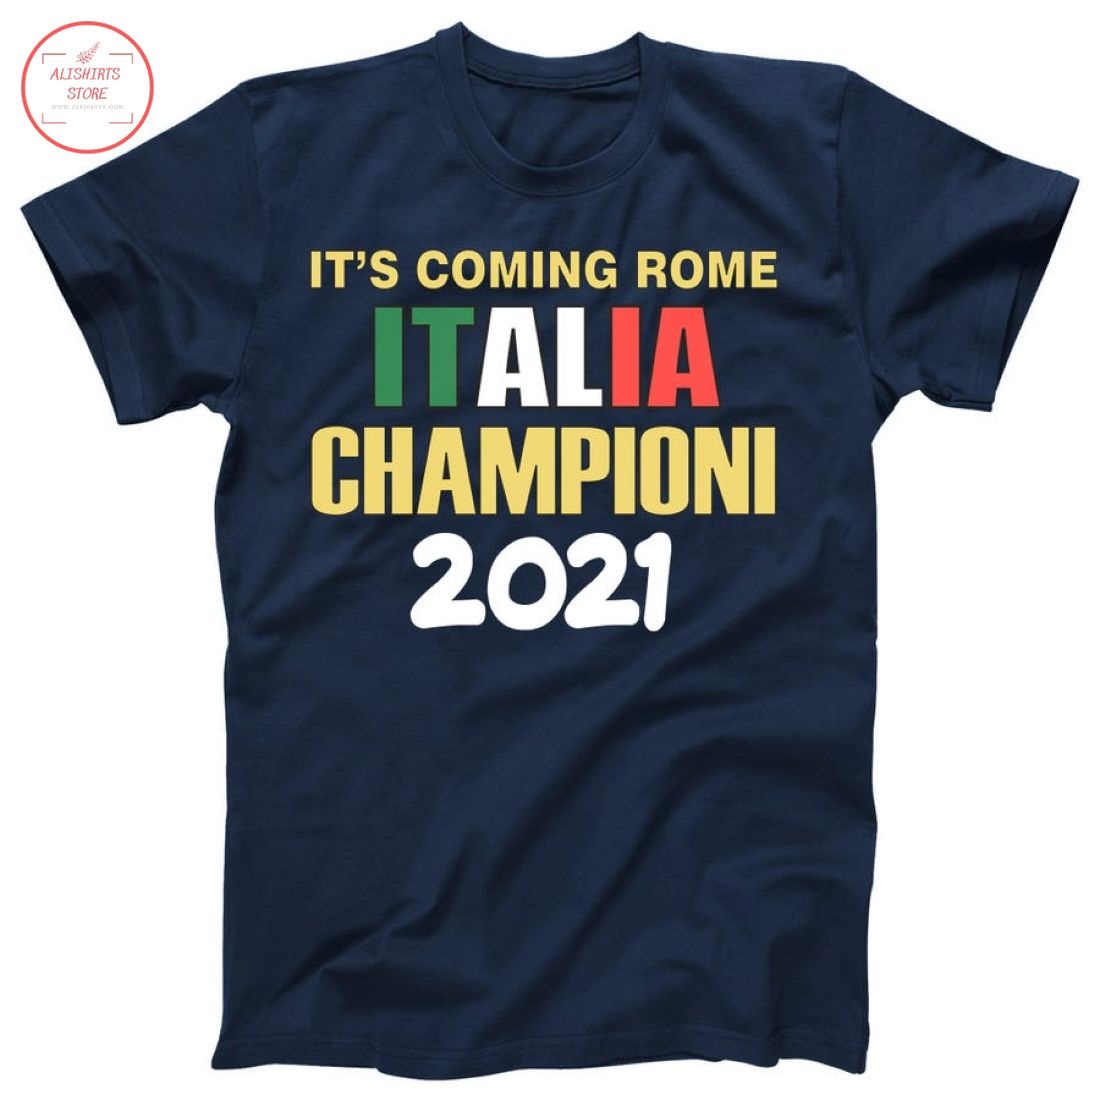 It's Coming Rome Italia Championi 2021 Shirt